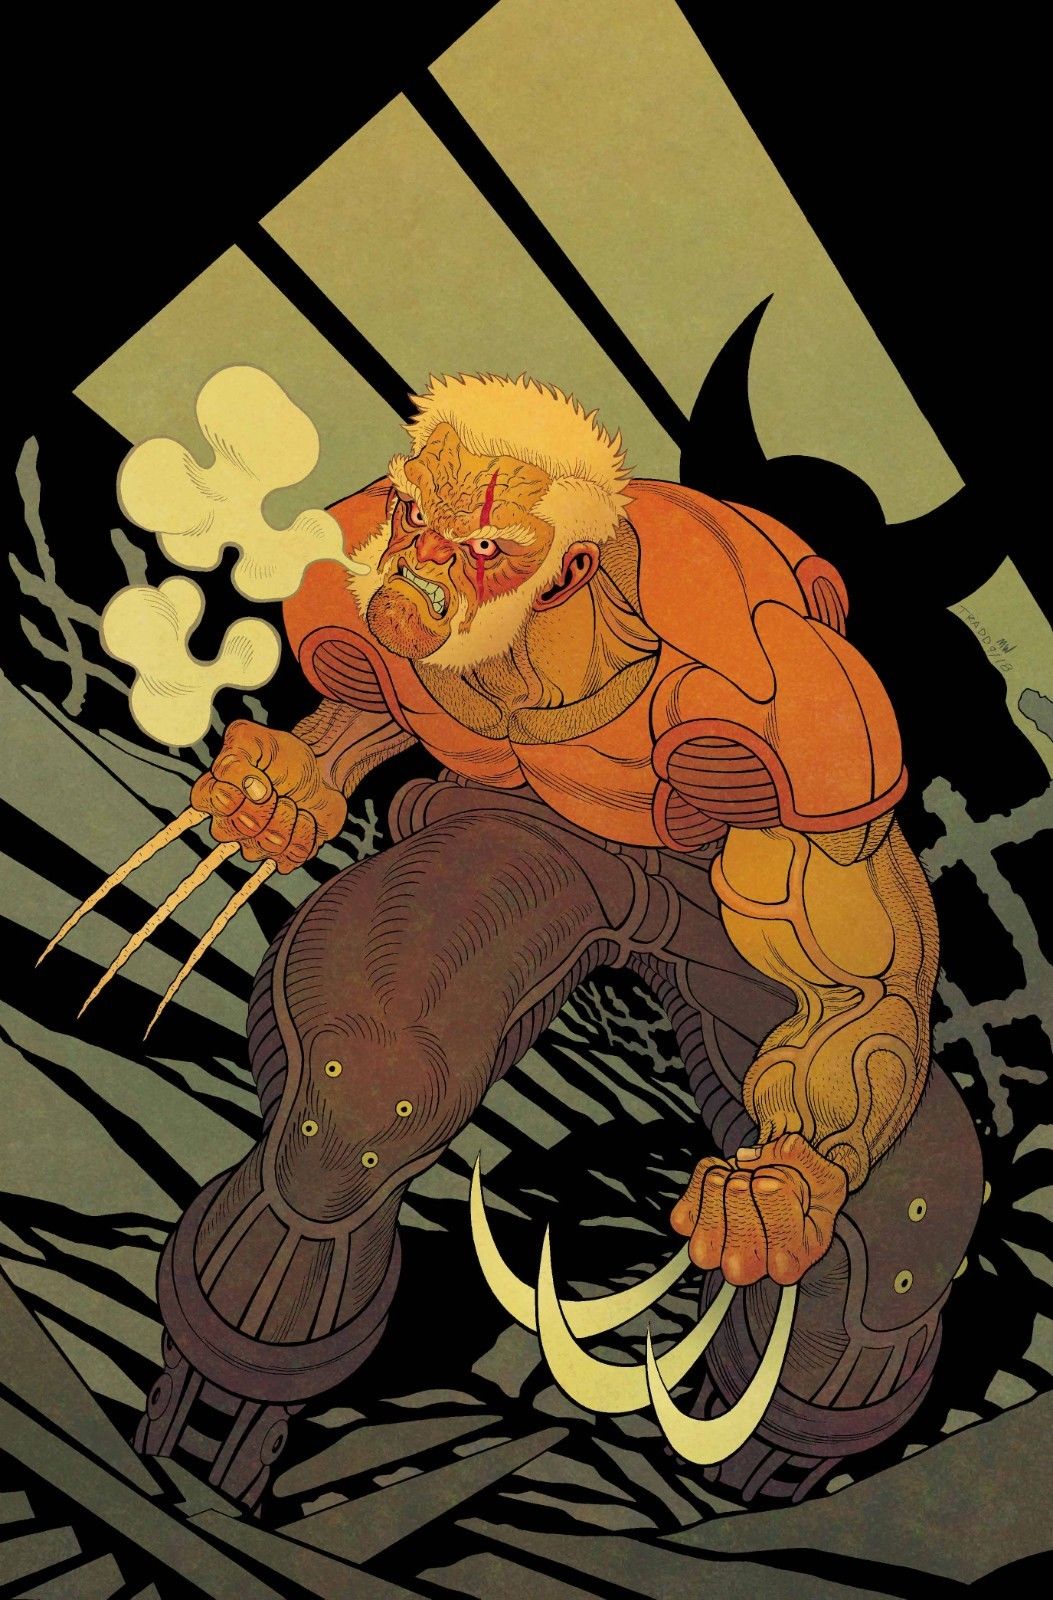 [EXCLUSIVE] Marvel preview: Dead Man Logan #1